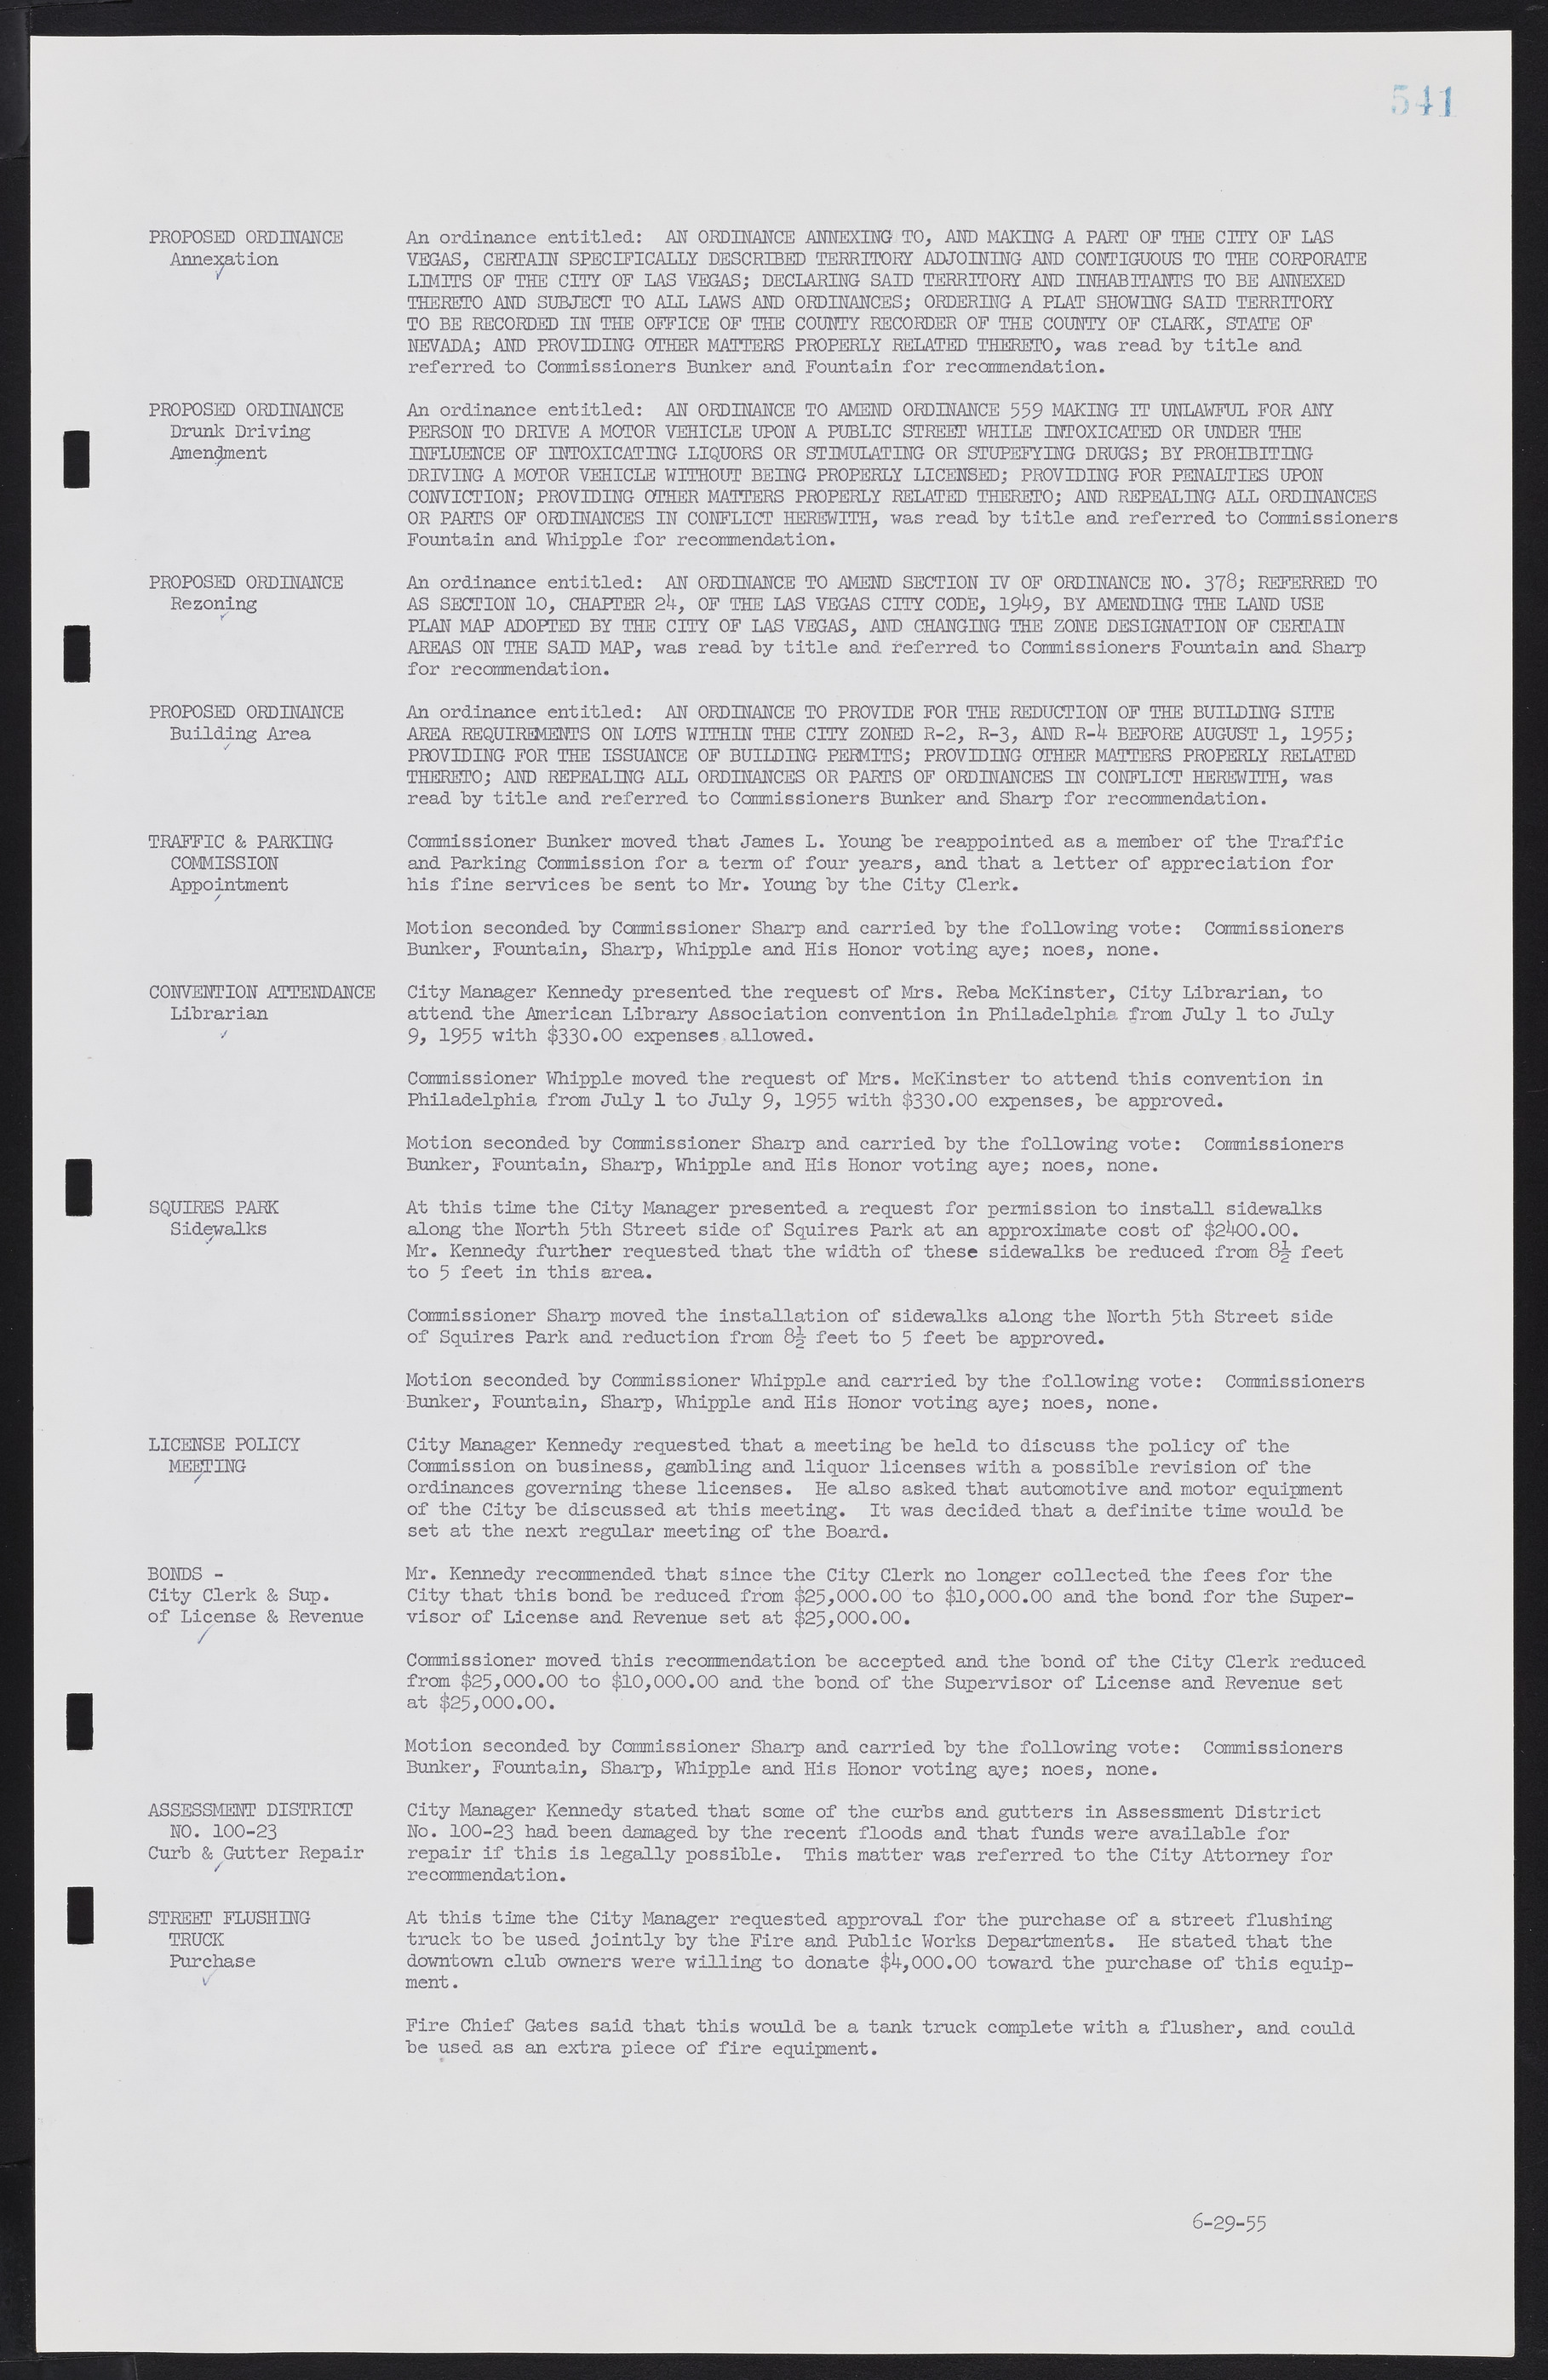 Las Vegas City Commission Minutes, February 17, 1954 to September 21, 1955, lvc000009-547